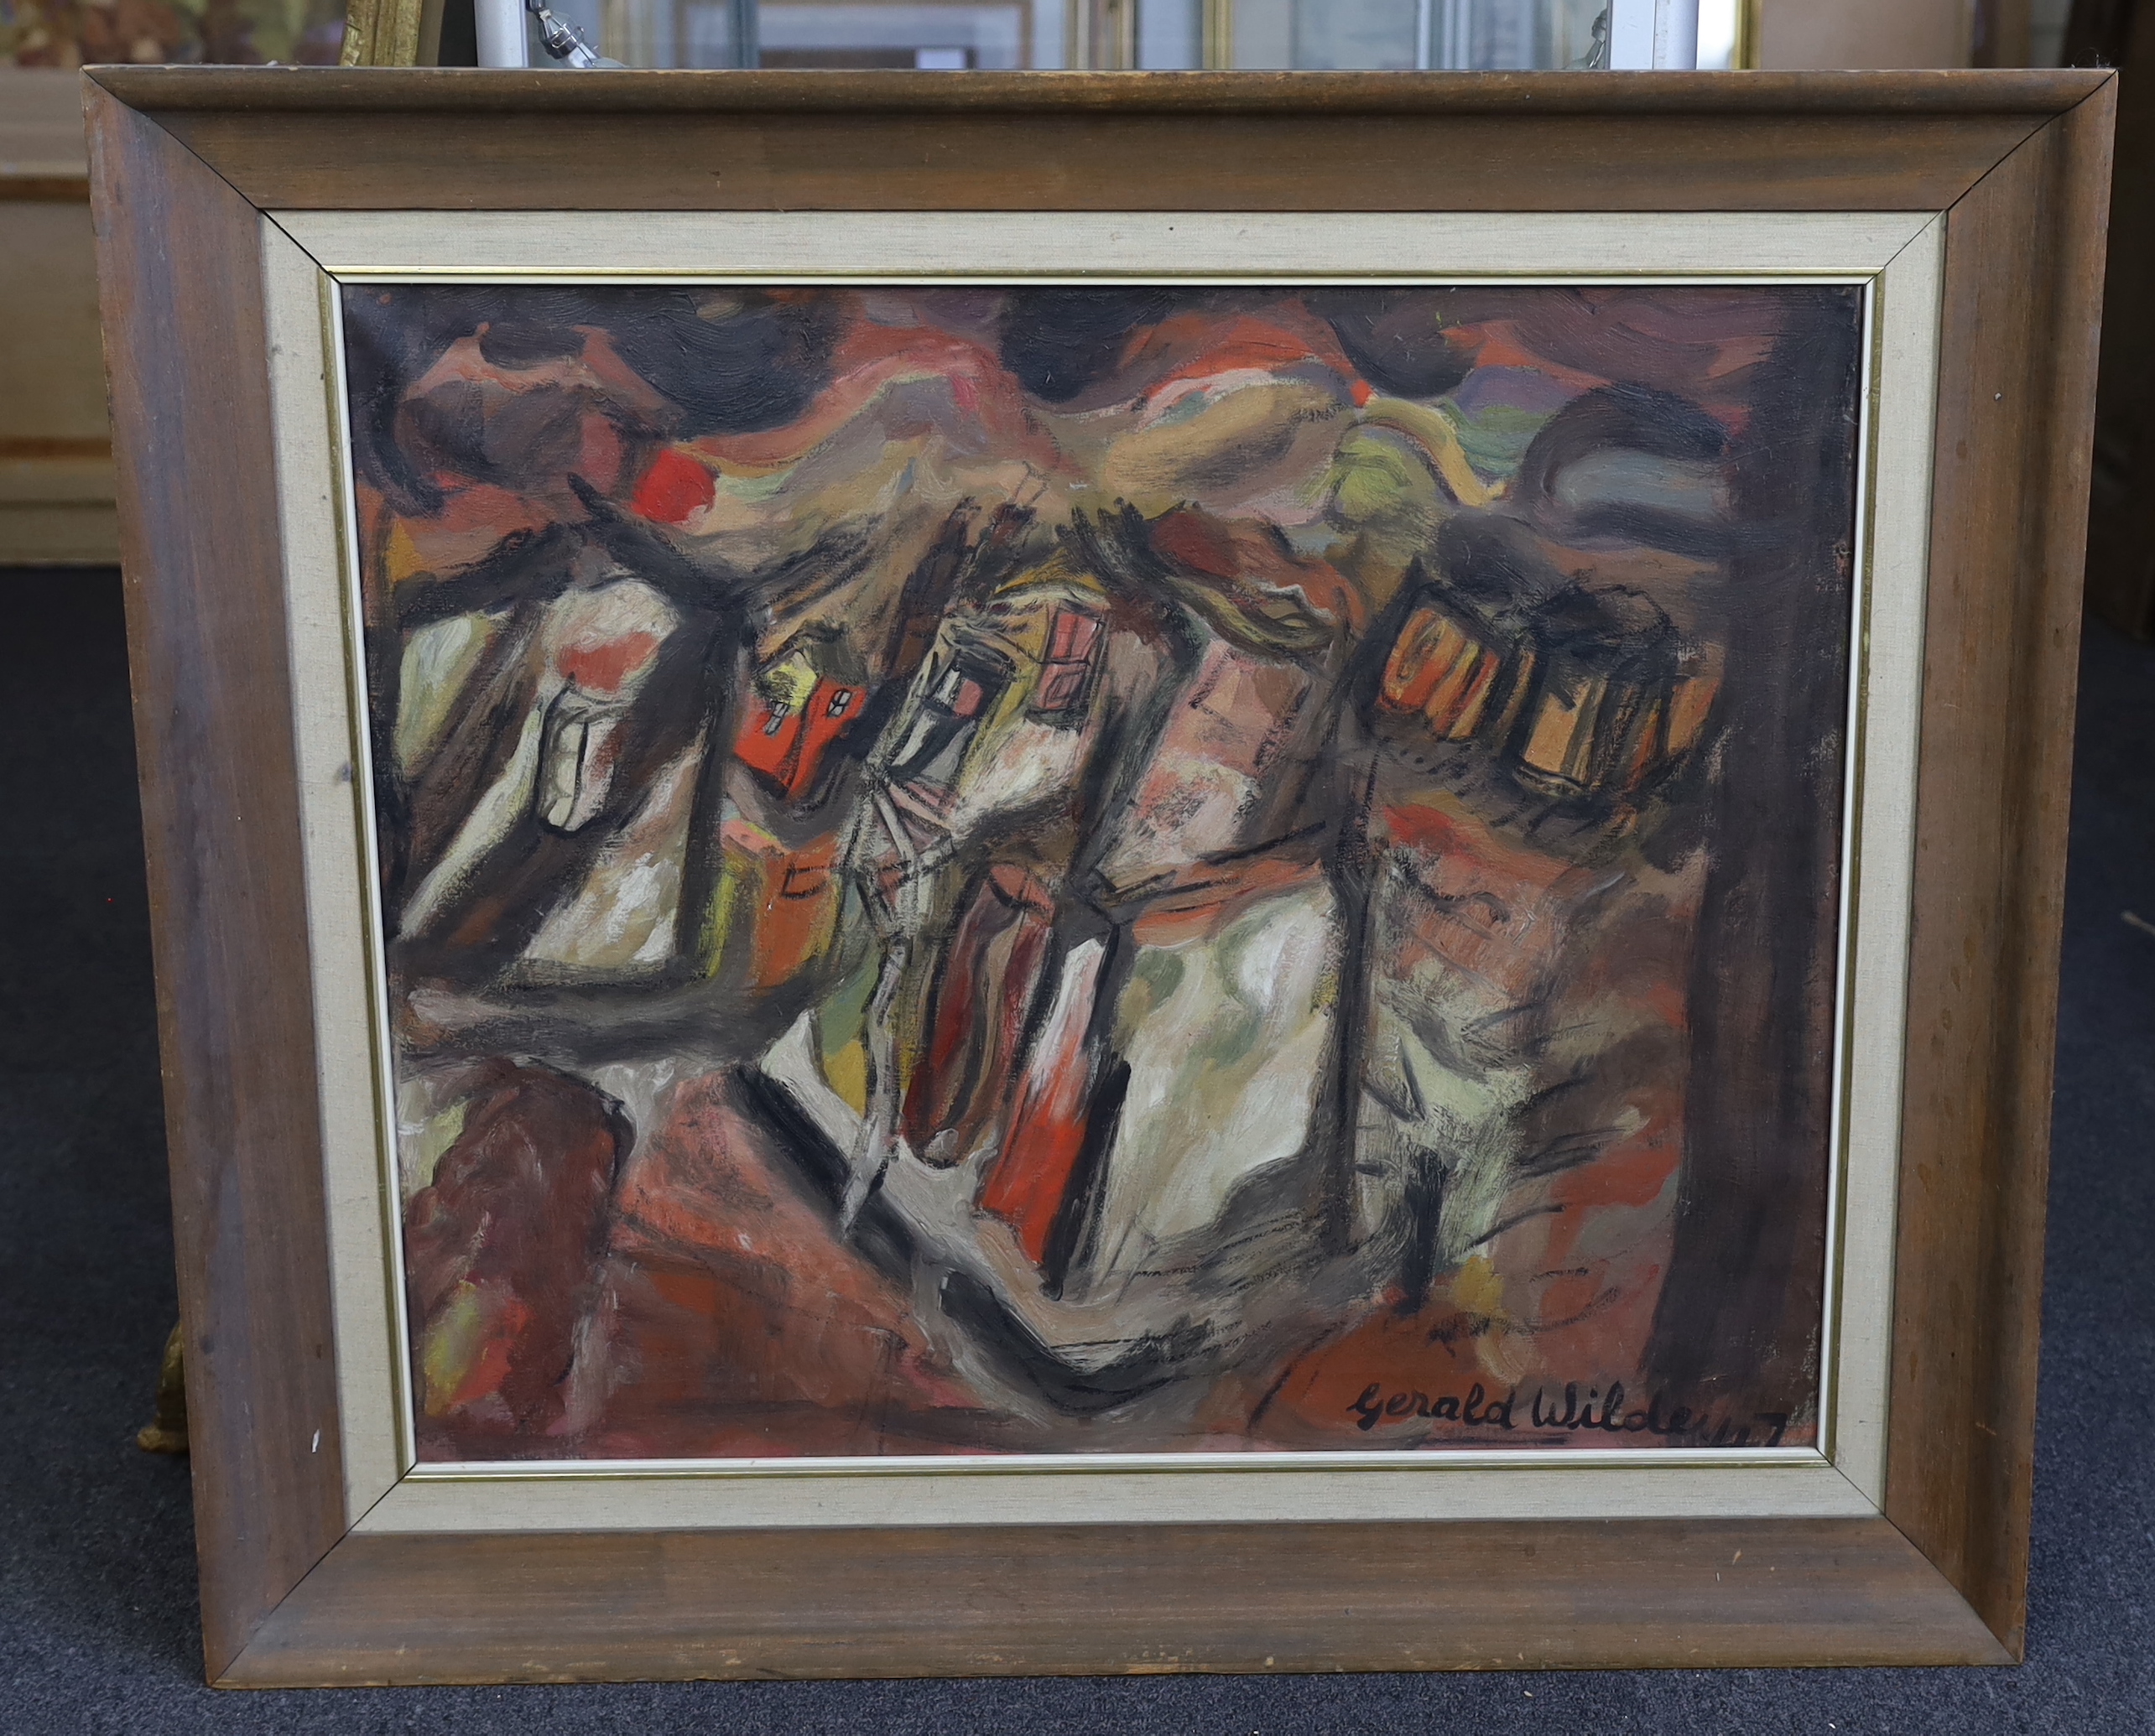 Gerald Wilde (1905-1986), ‘Street Scene (2)’, oil on canvas, 63 x 76cm